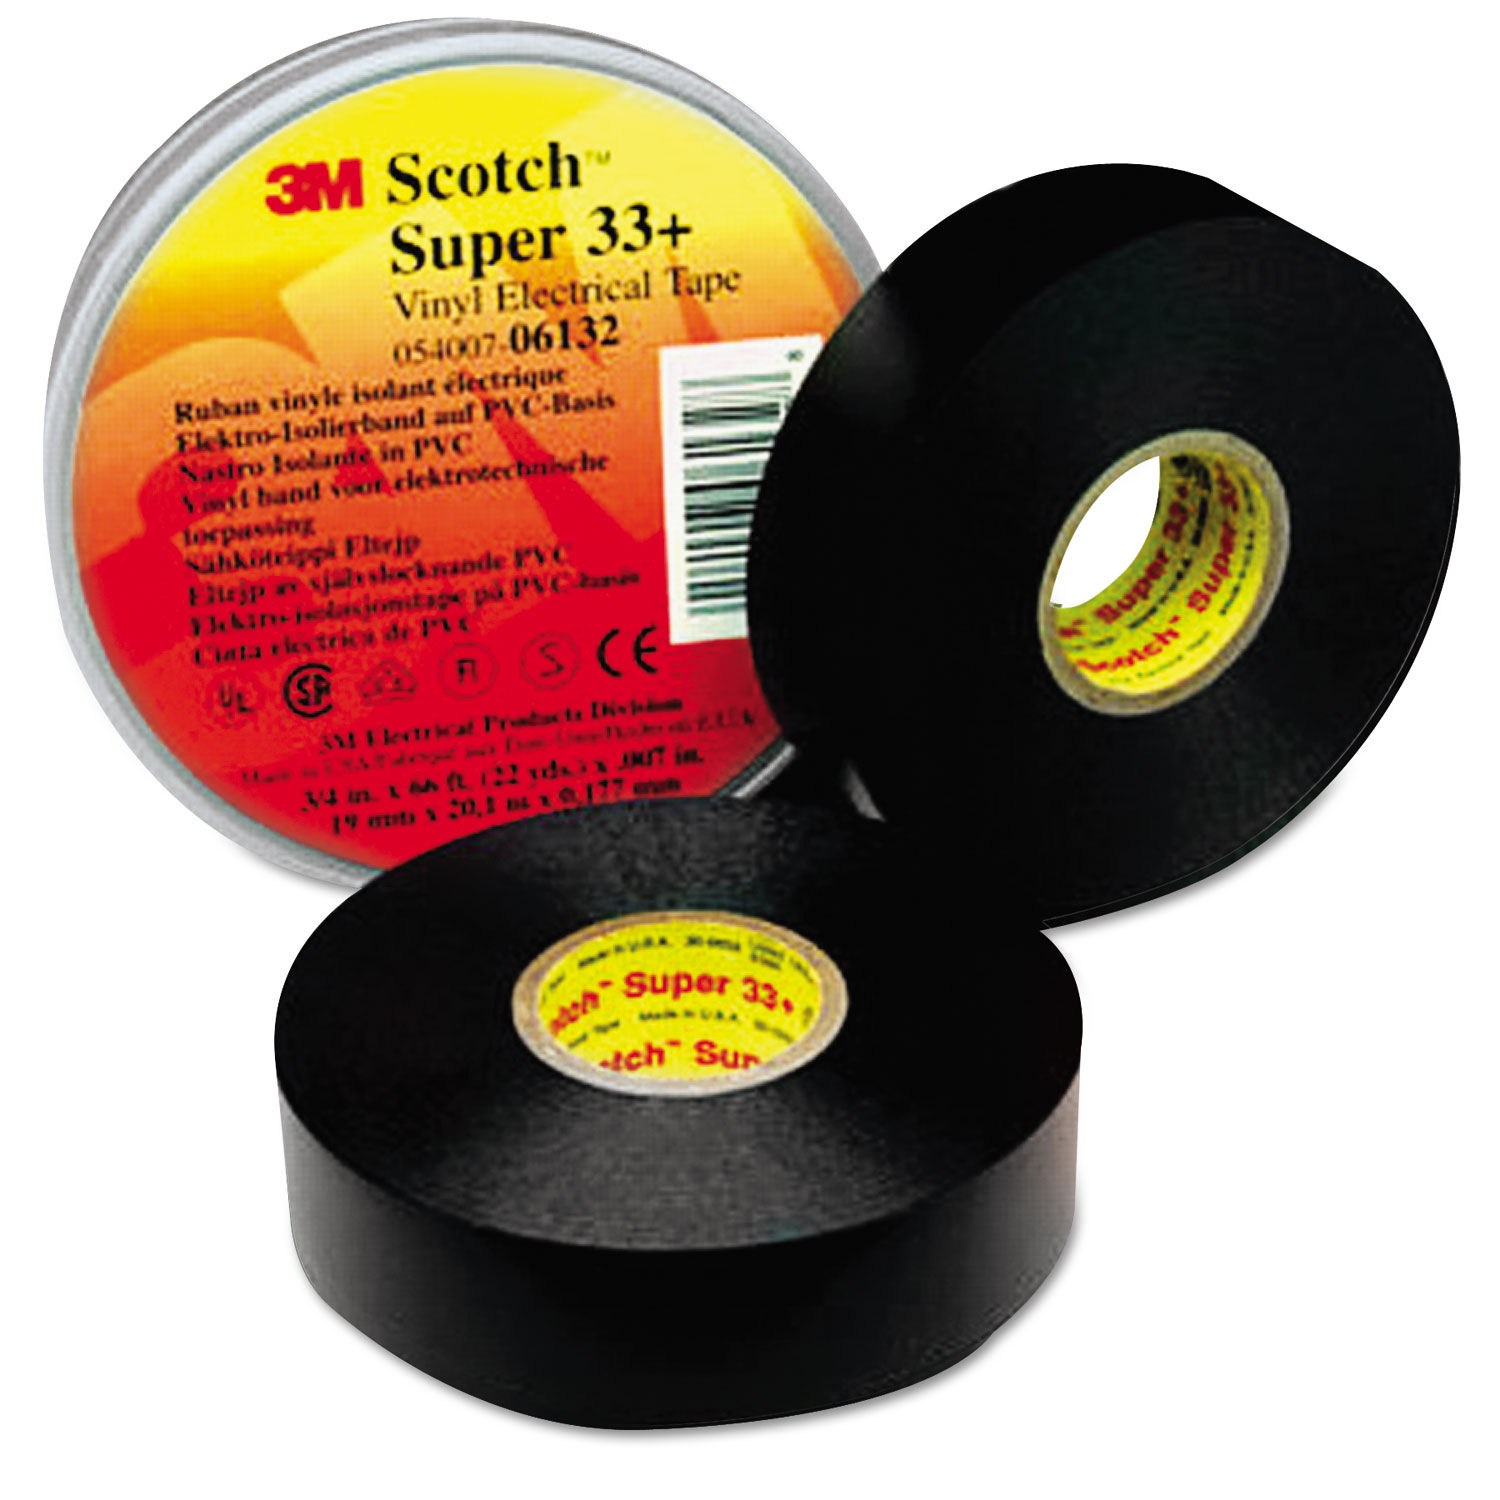 Scotch Super 33 Plus Vinyl Electrical Tape 22 yd Length x 0.75 Width Rubber  Vinyl Backing 10 Carton Black - Office Depot